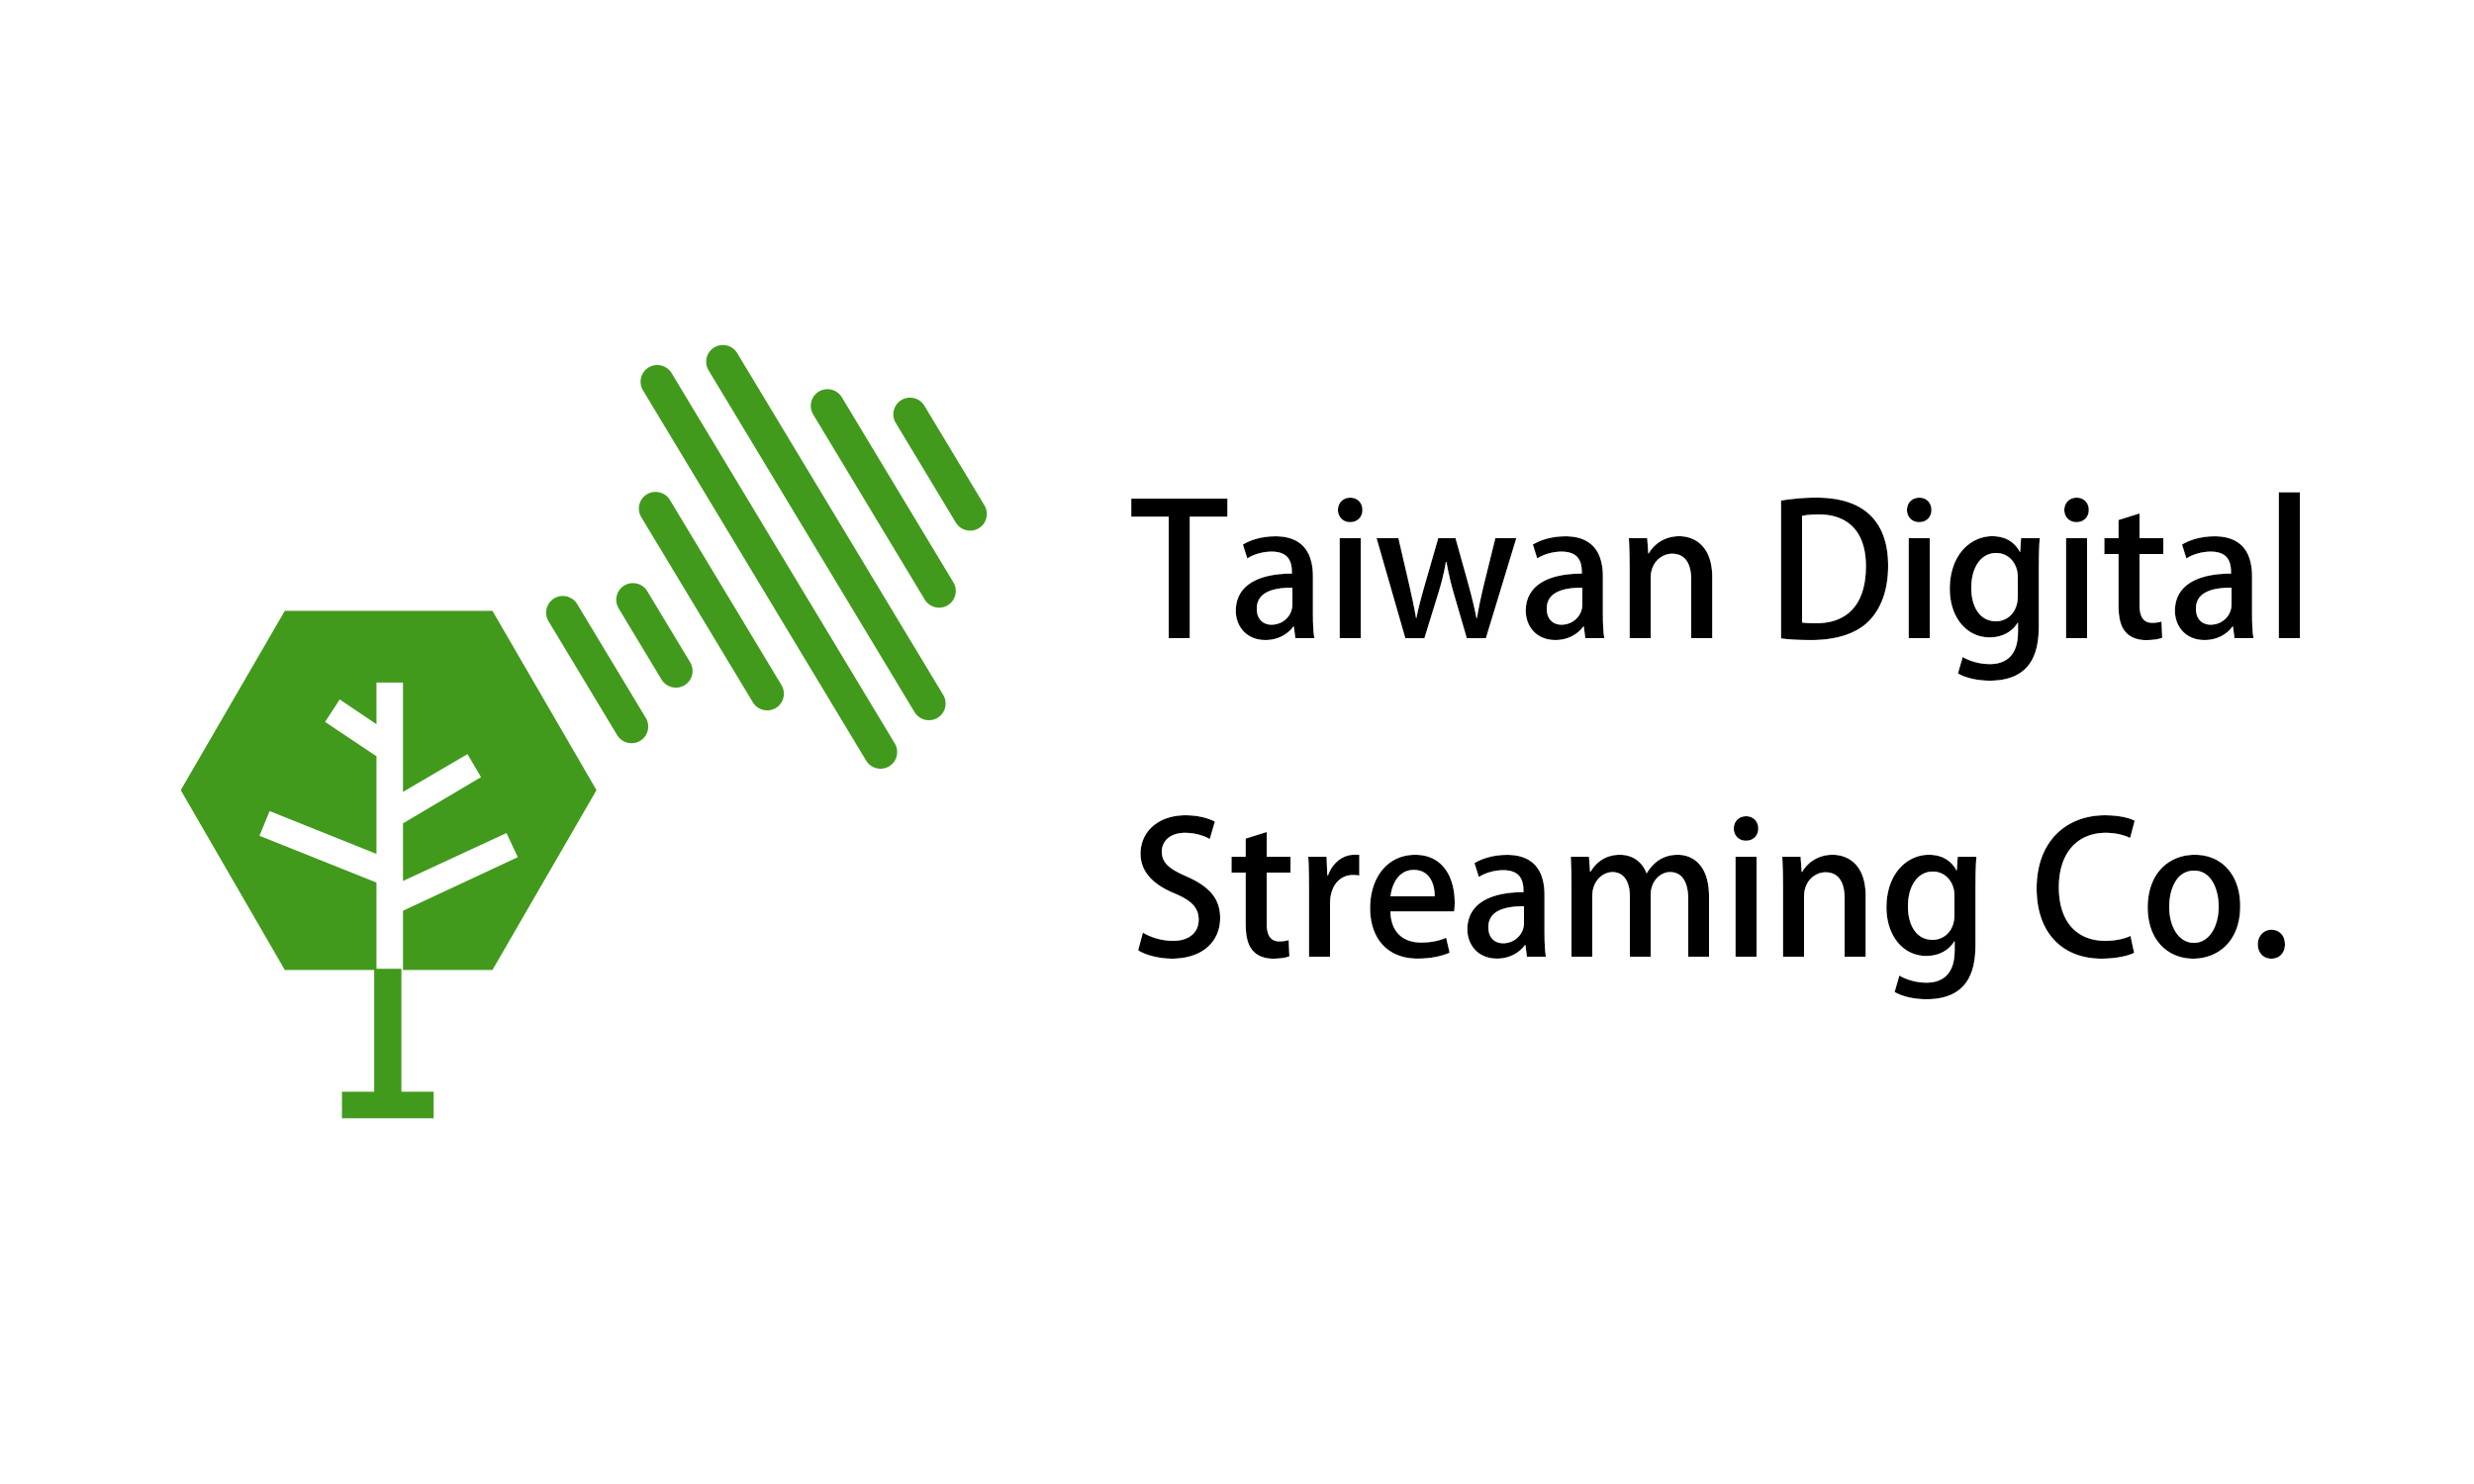 Taiwan Digital Streaming Co. logo